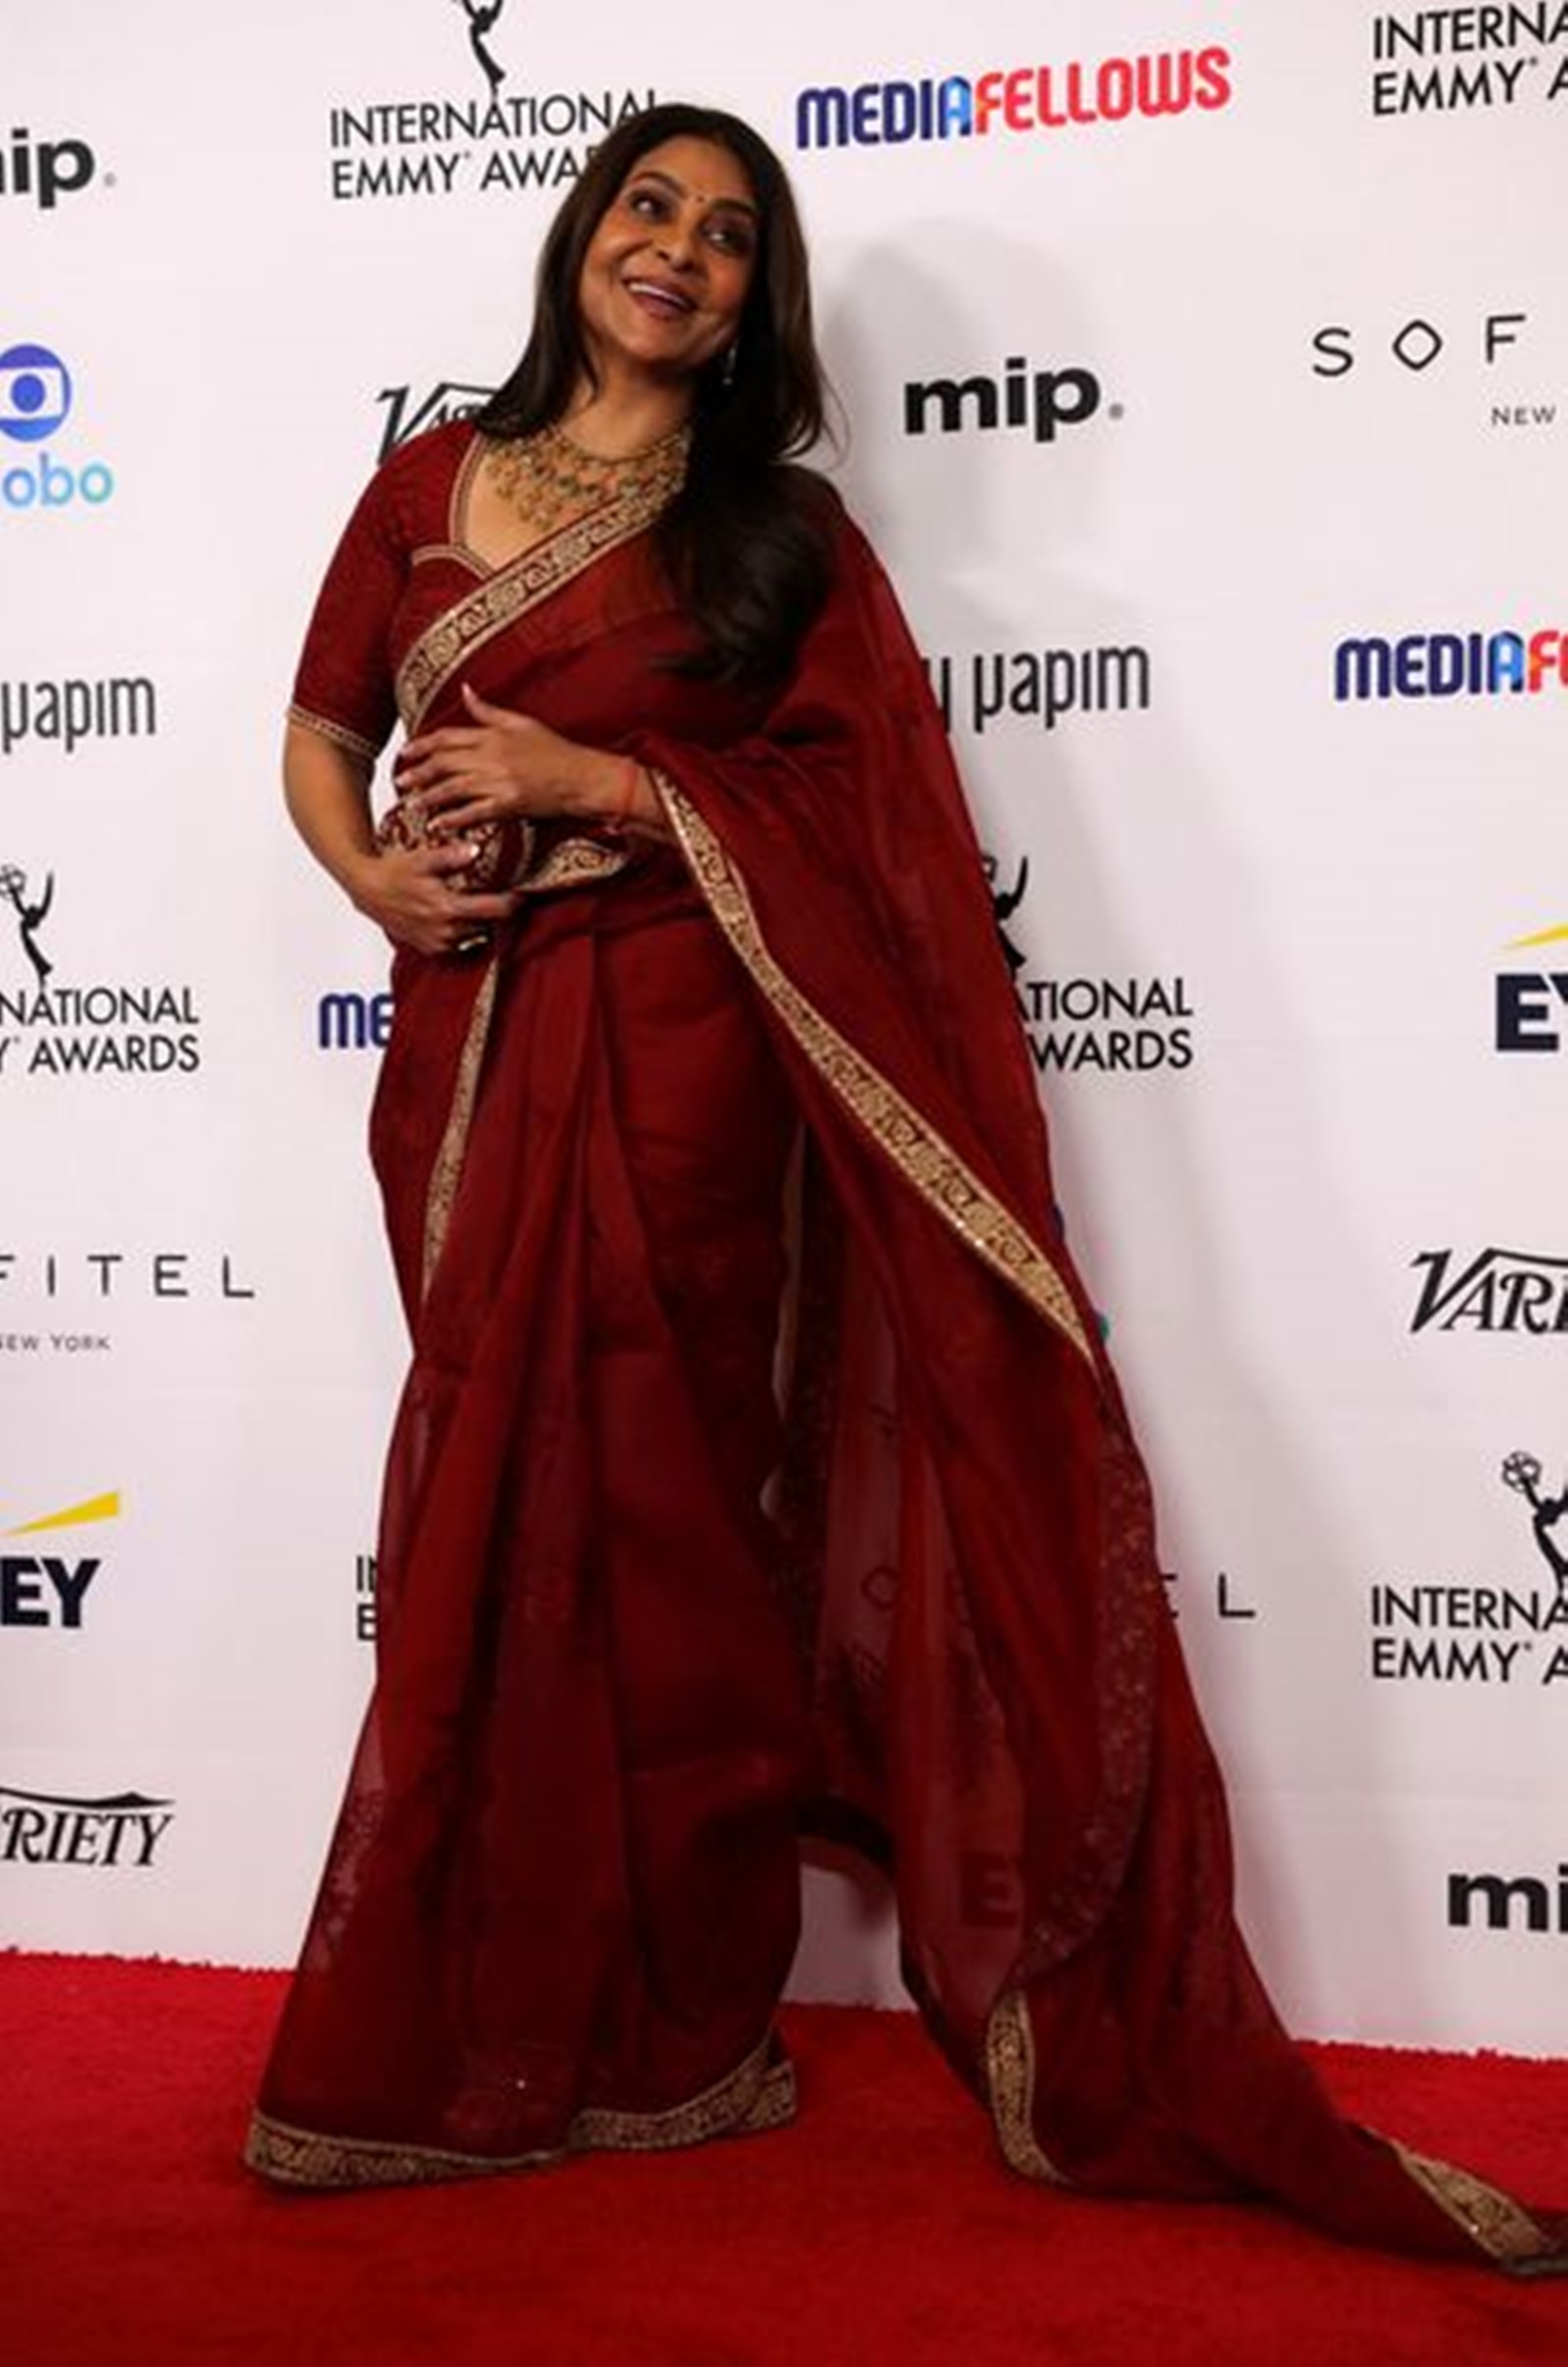 International Emmy Awards 2023, Indian Celebrities Fashion,Shefali Shah Red Sari